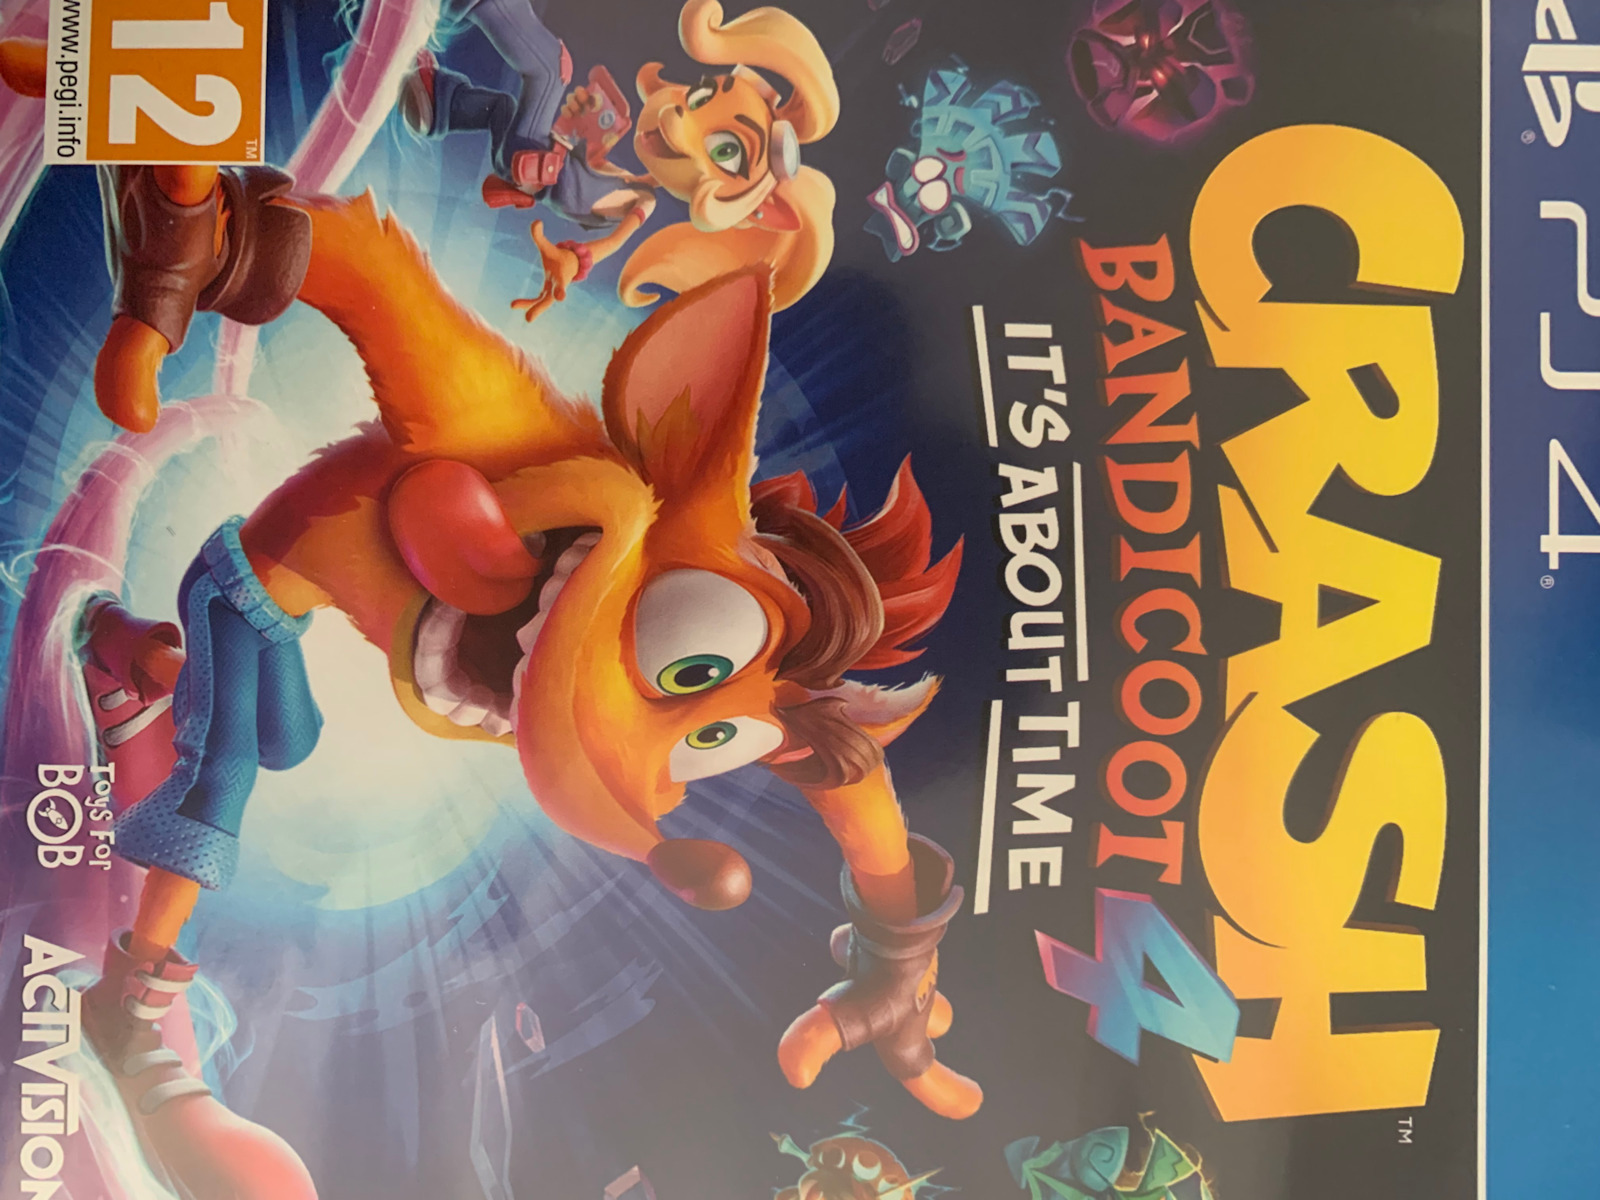 Crash Bandicoot 4: It's About Time vaza e sugere game para PS4 e Xbox One